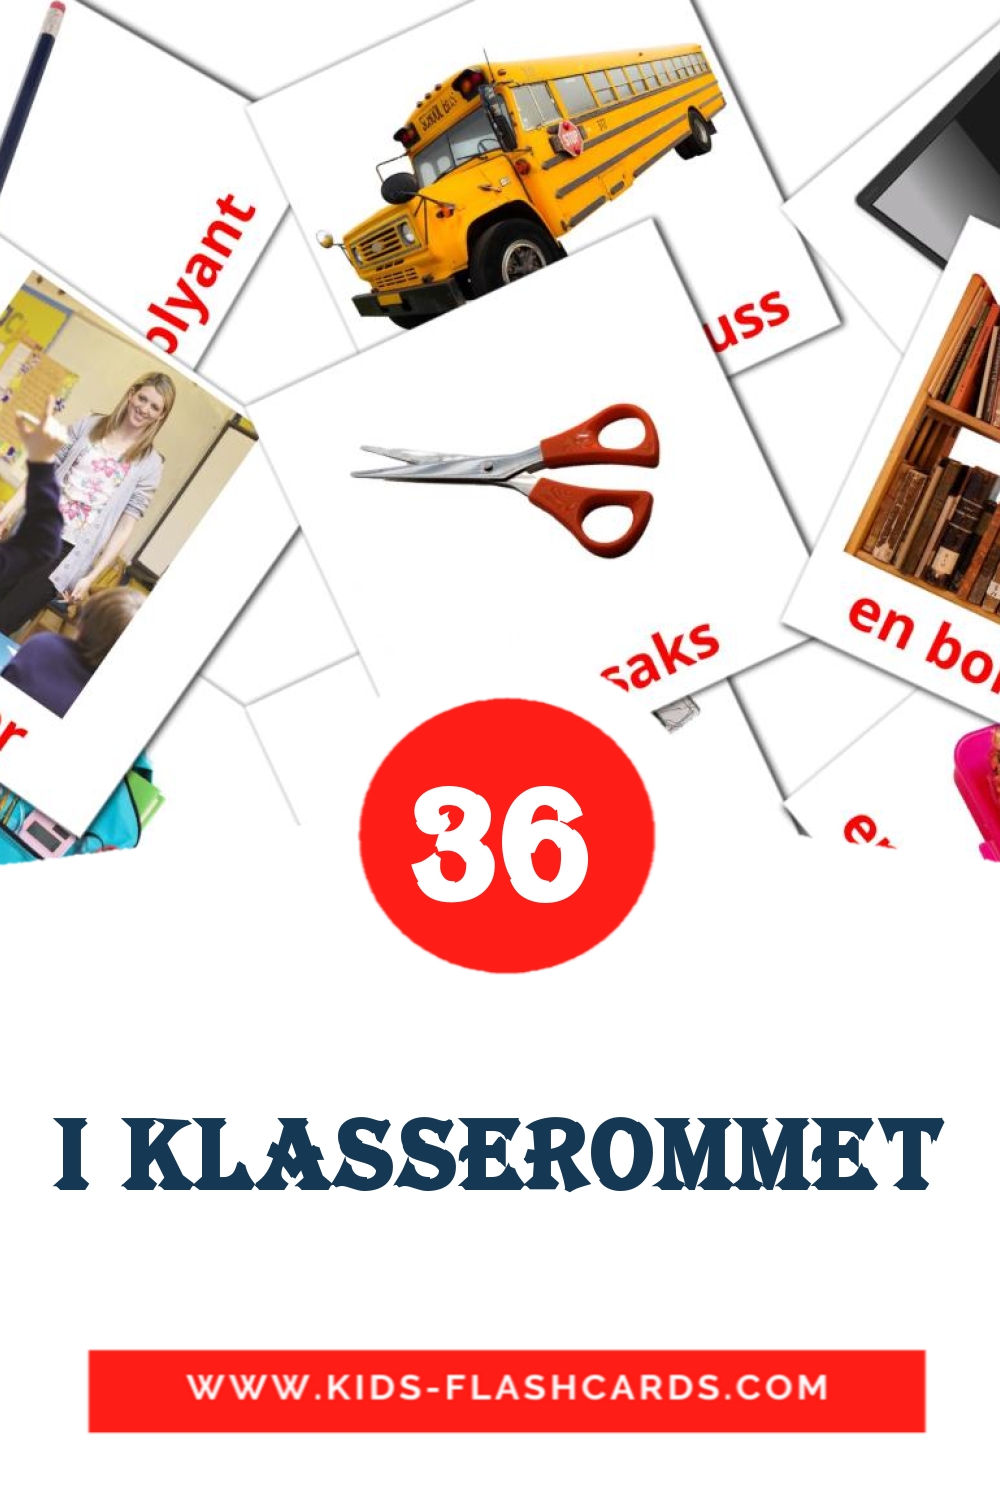 36 carte illustrate di I klasserommet per la scuola materna in norvegese